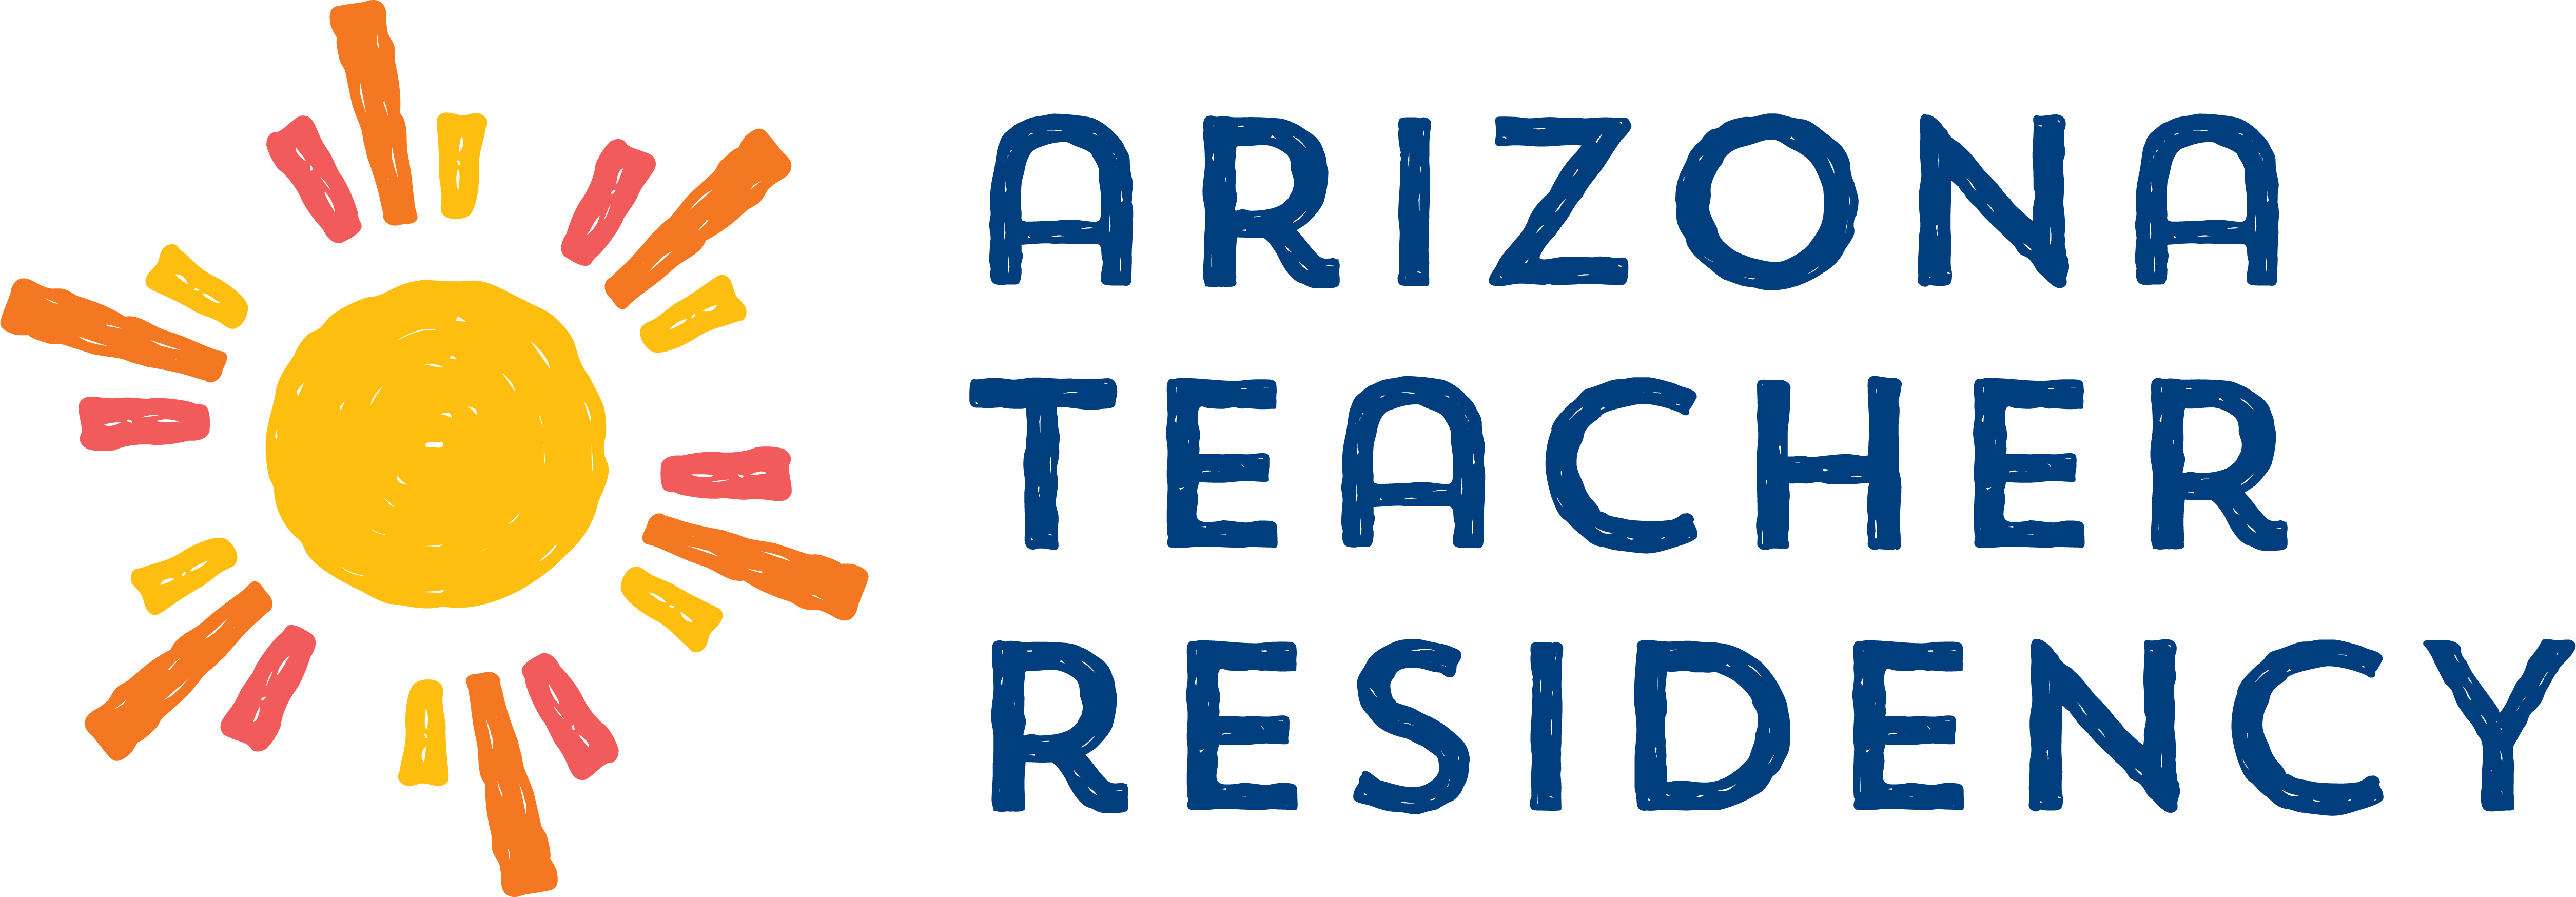 featured image:Arizona Teacher Residency Logo